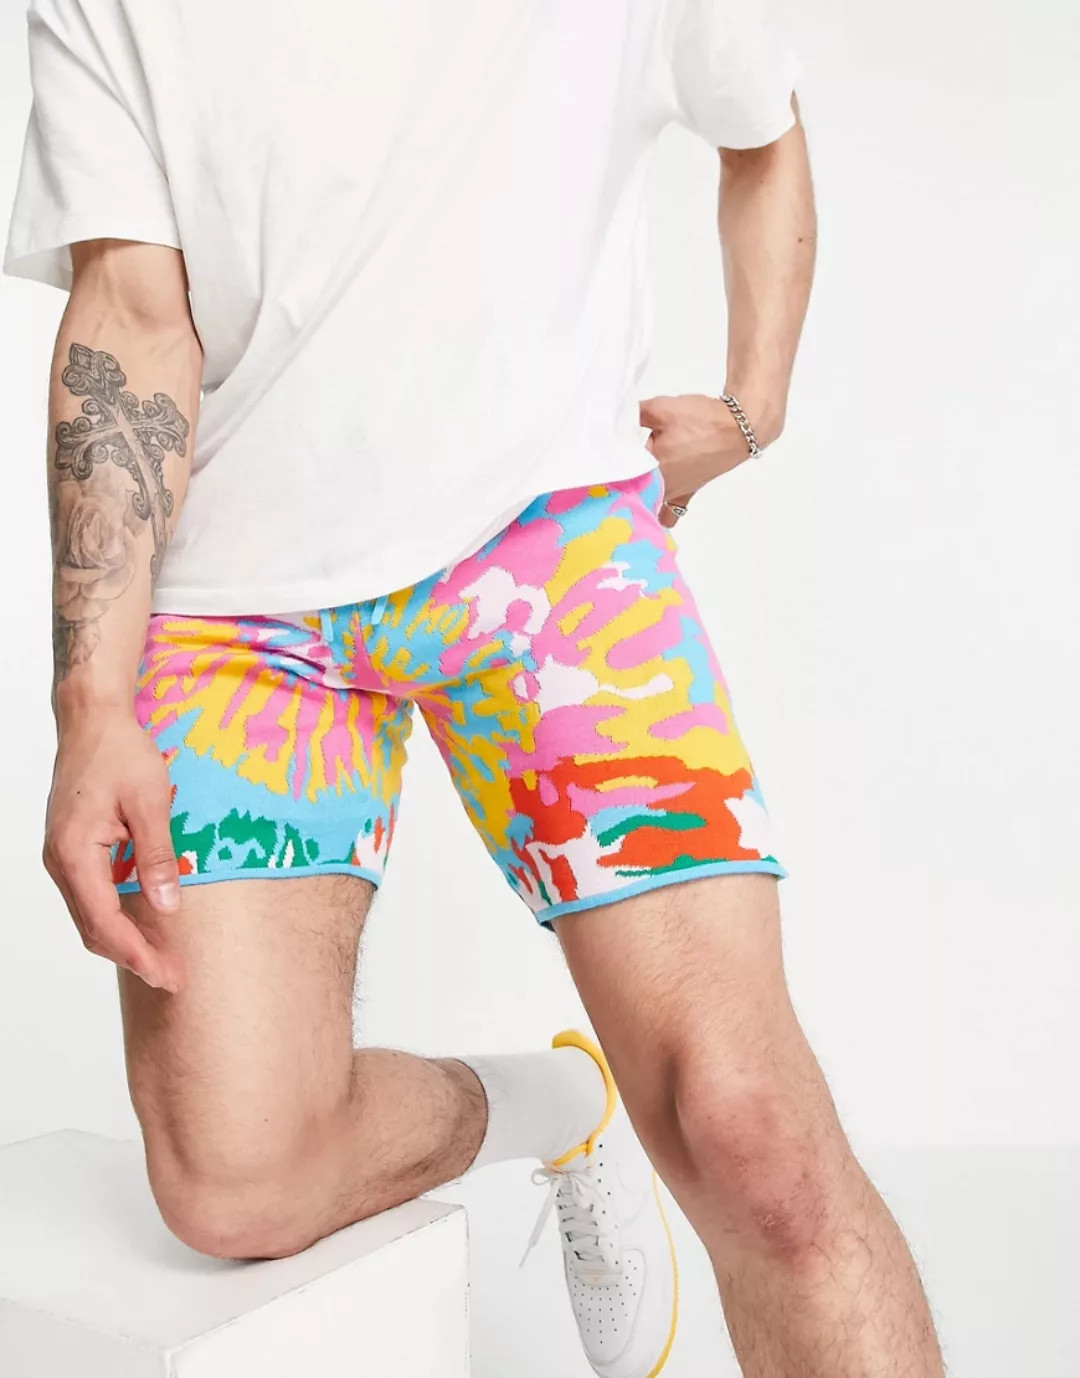 ASOS DESIGN – Strick-Shorts in bunter Batikoptik, Kombiteil-Mehrfarbig günstig online kaufen